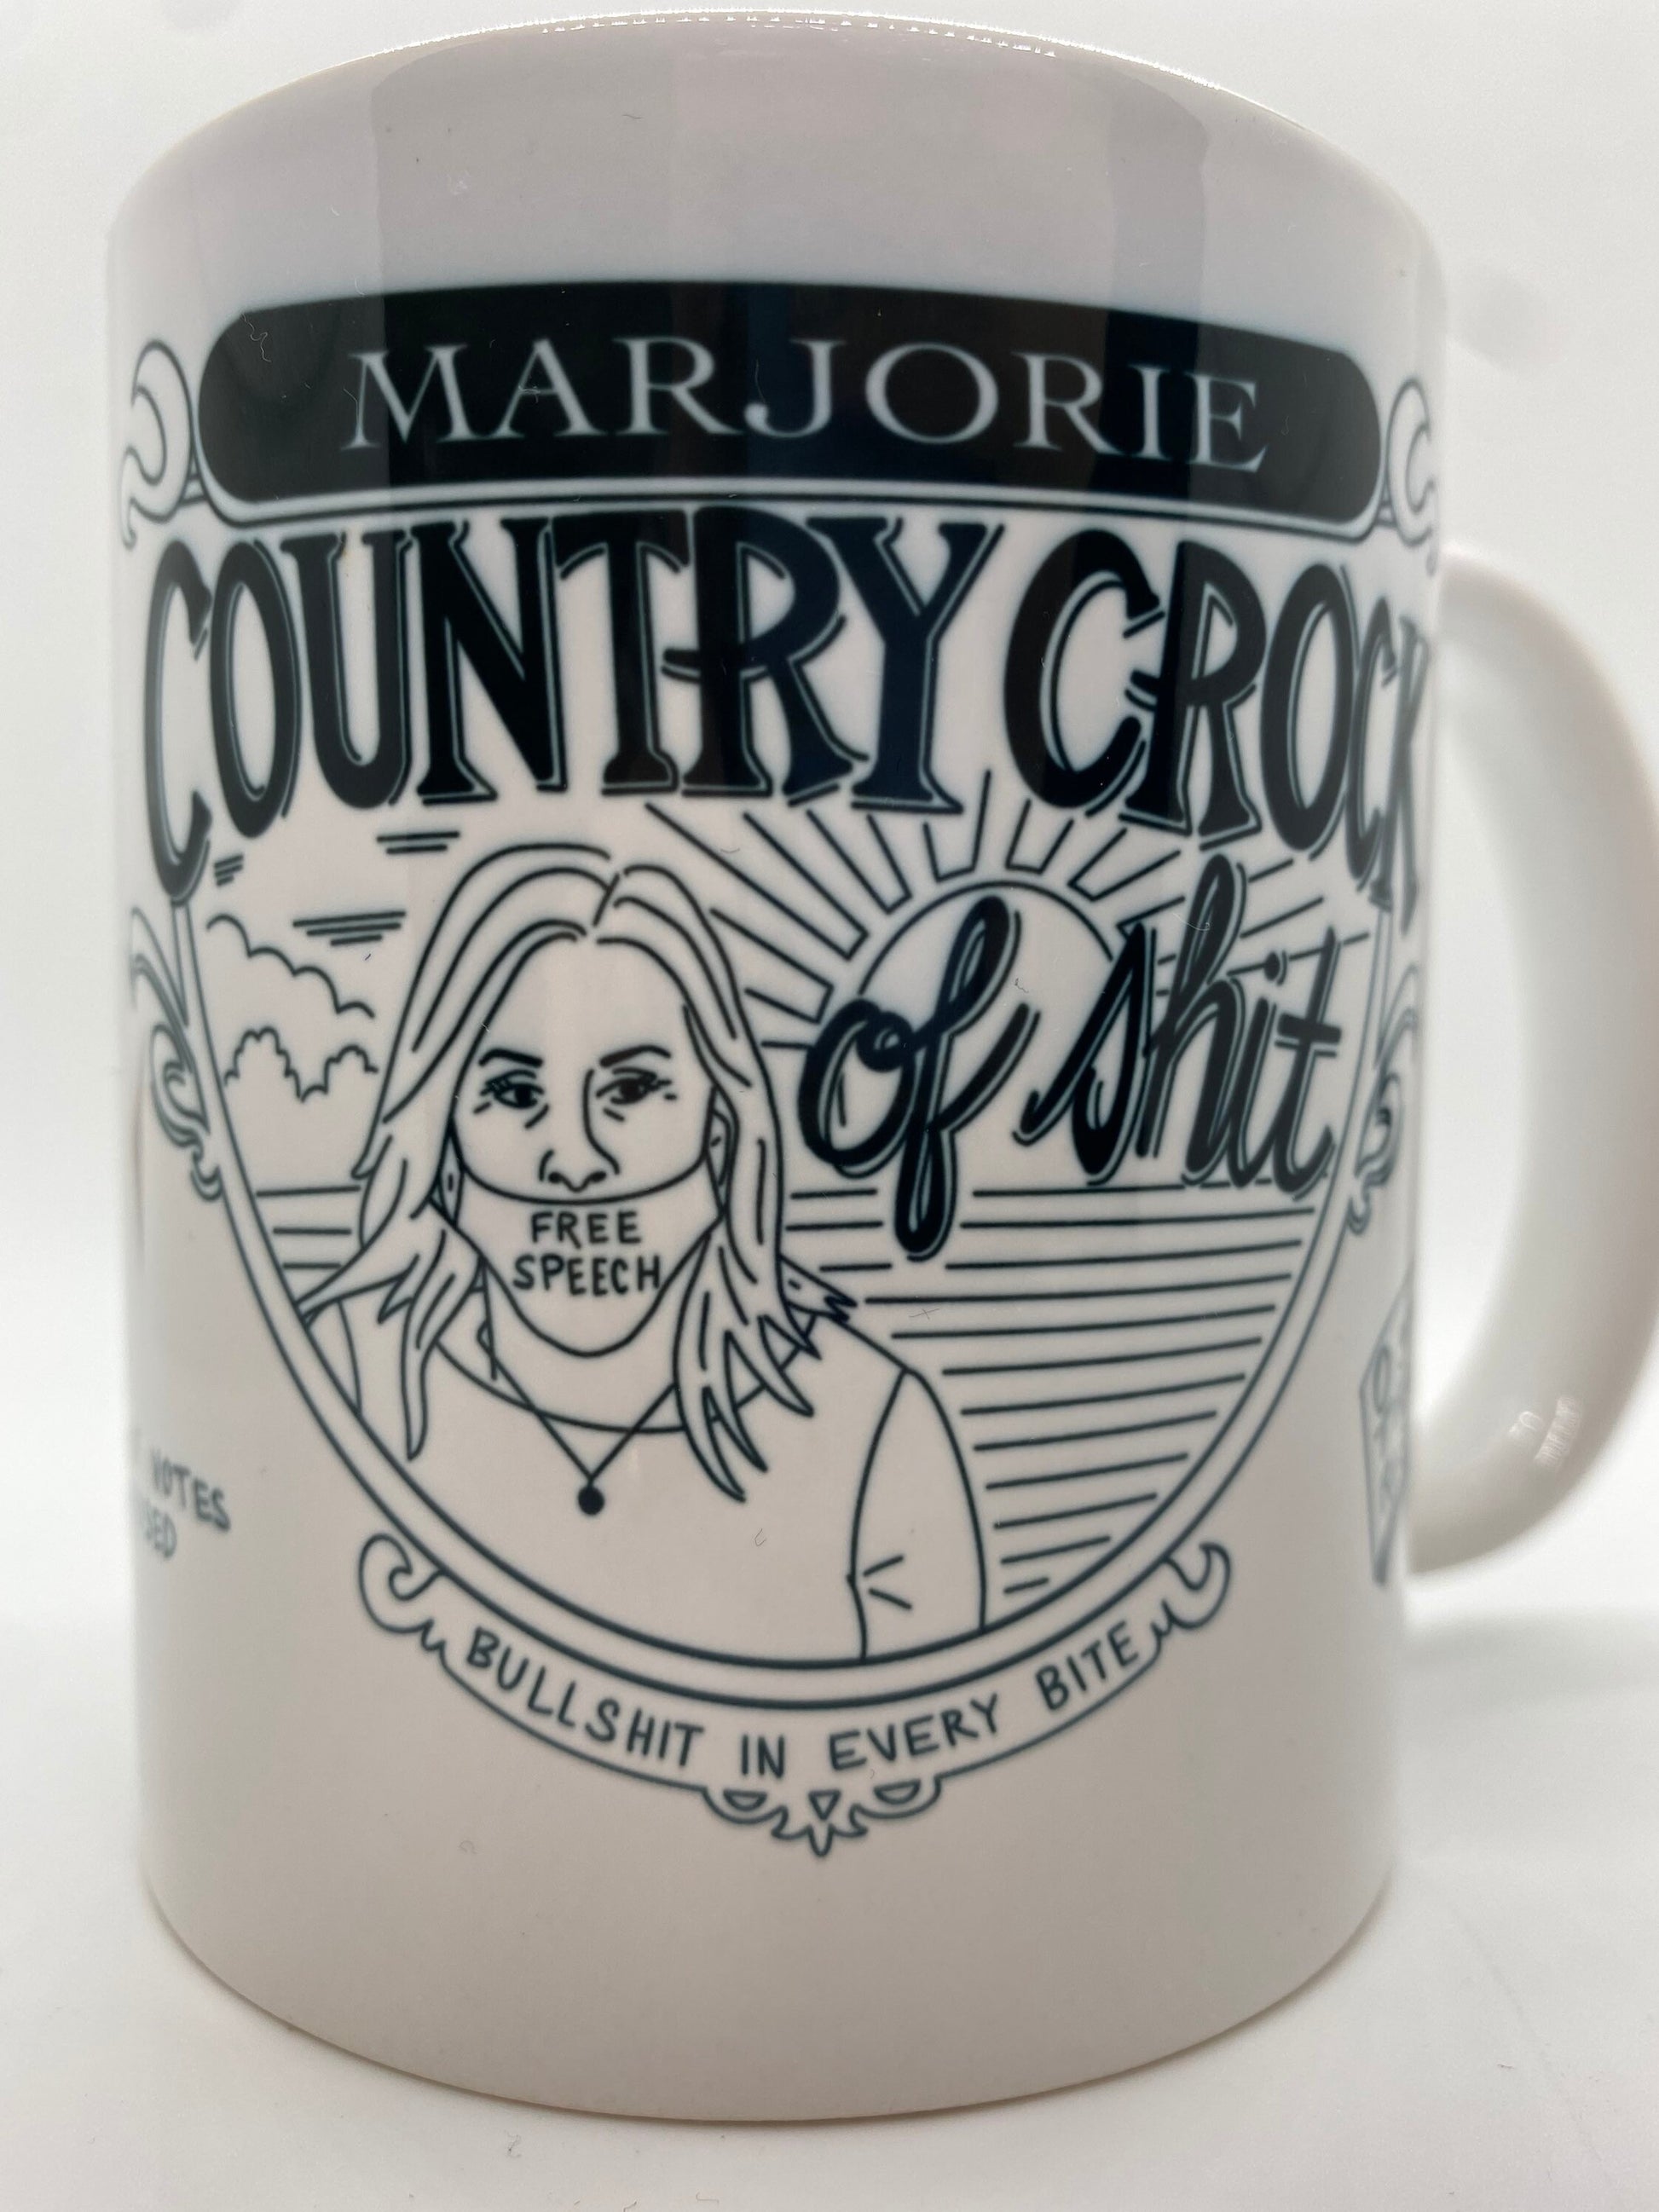 Marjorie MTG Country Crock of Sh!t Mug